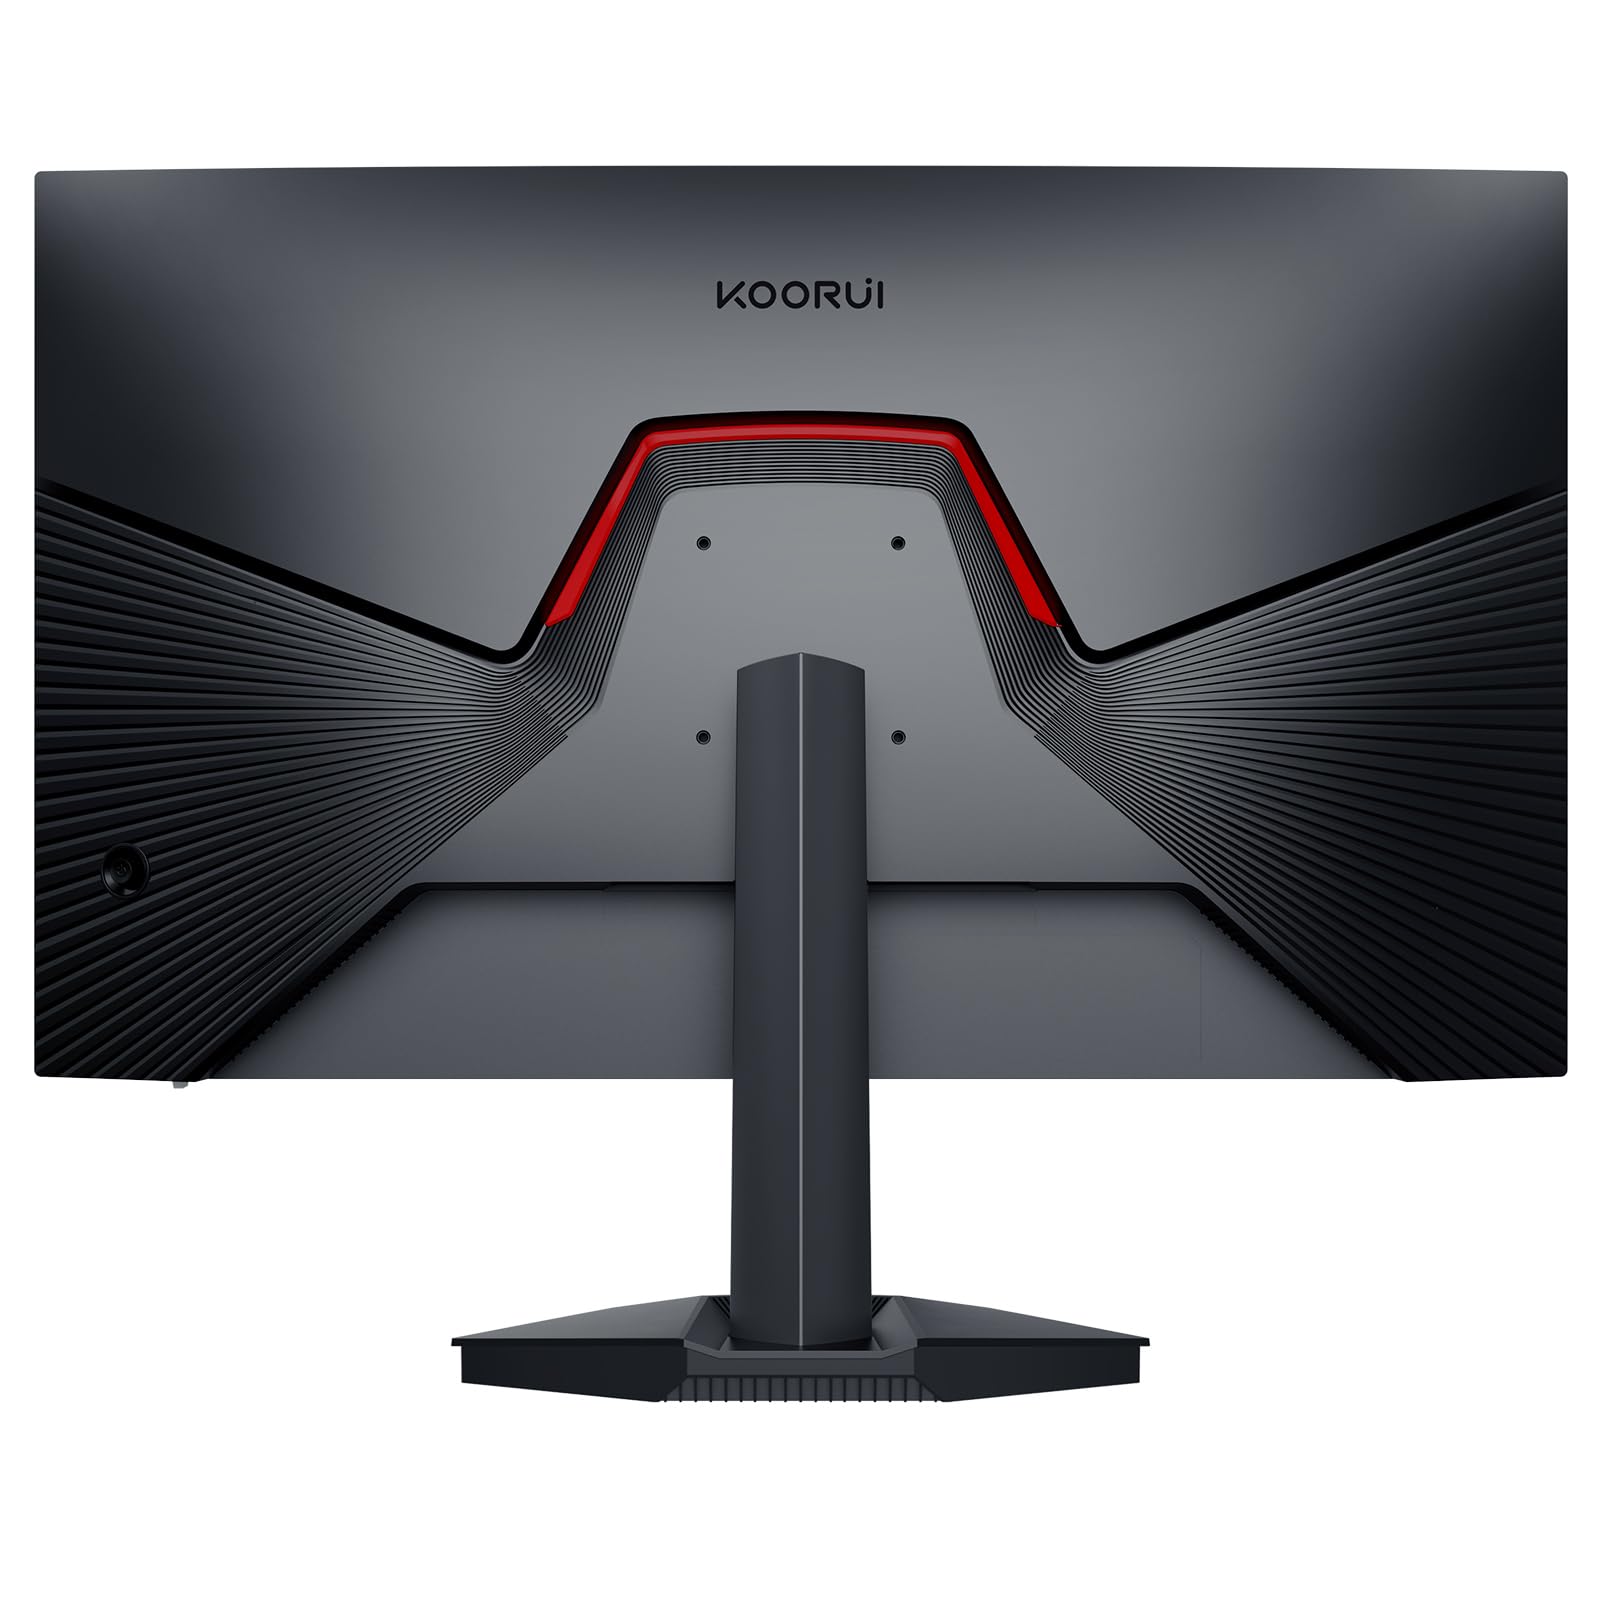 KOORUI 27 Inch Full HD Gaming Monitor 165hz, 1ms, DCI-P3 90% Color Gamut, Adaptive Sync Compatible, (1920 x 1080, HDMI, DisplayPort) Black